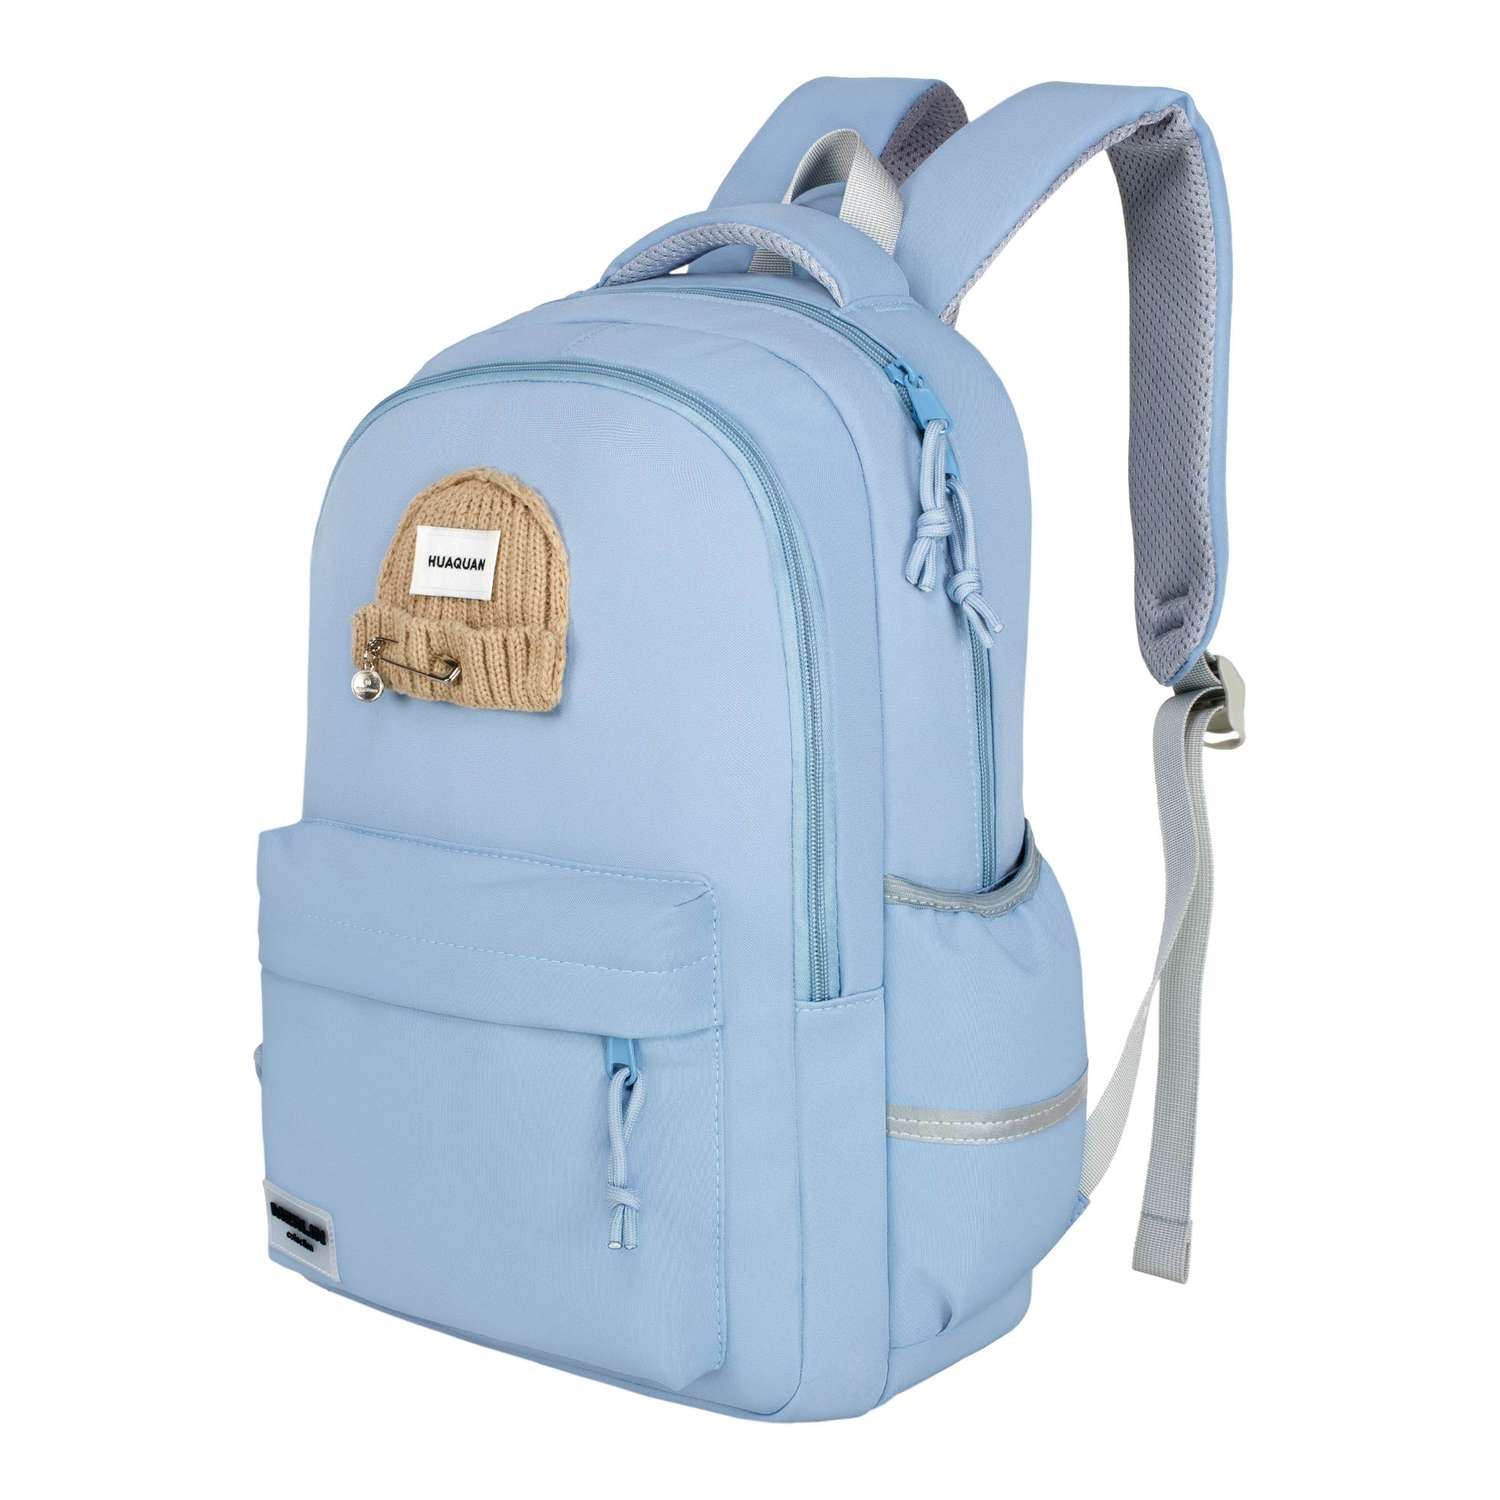 Рюкзак MERLIN M765 голубой - фото 4